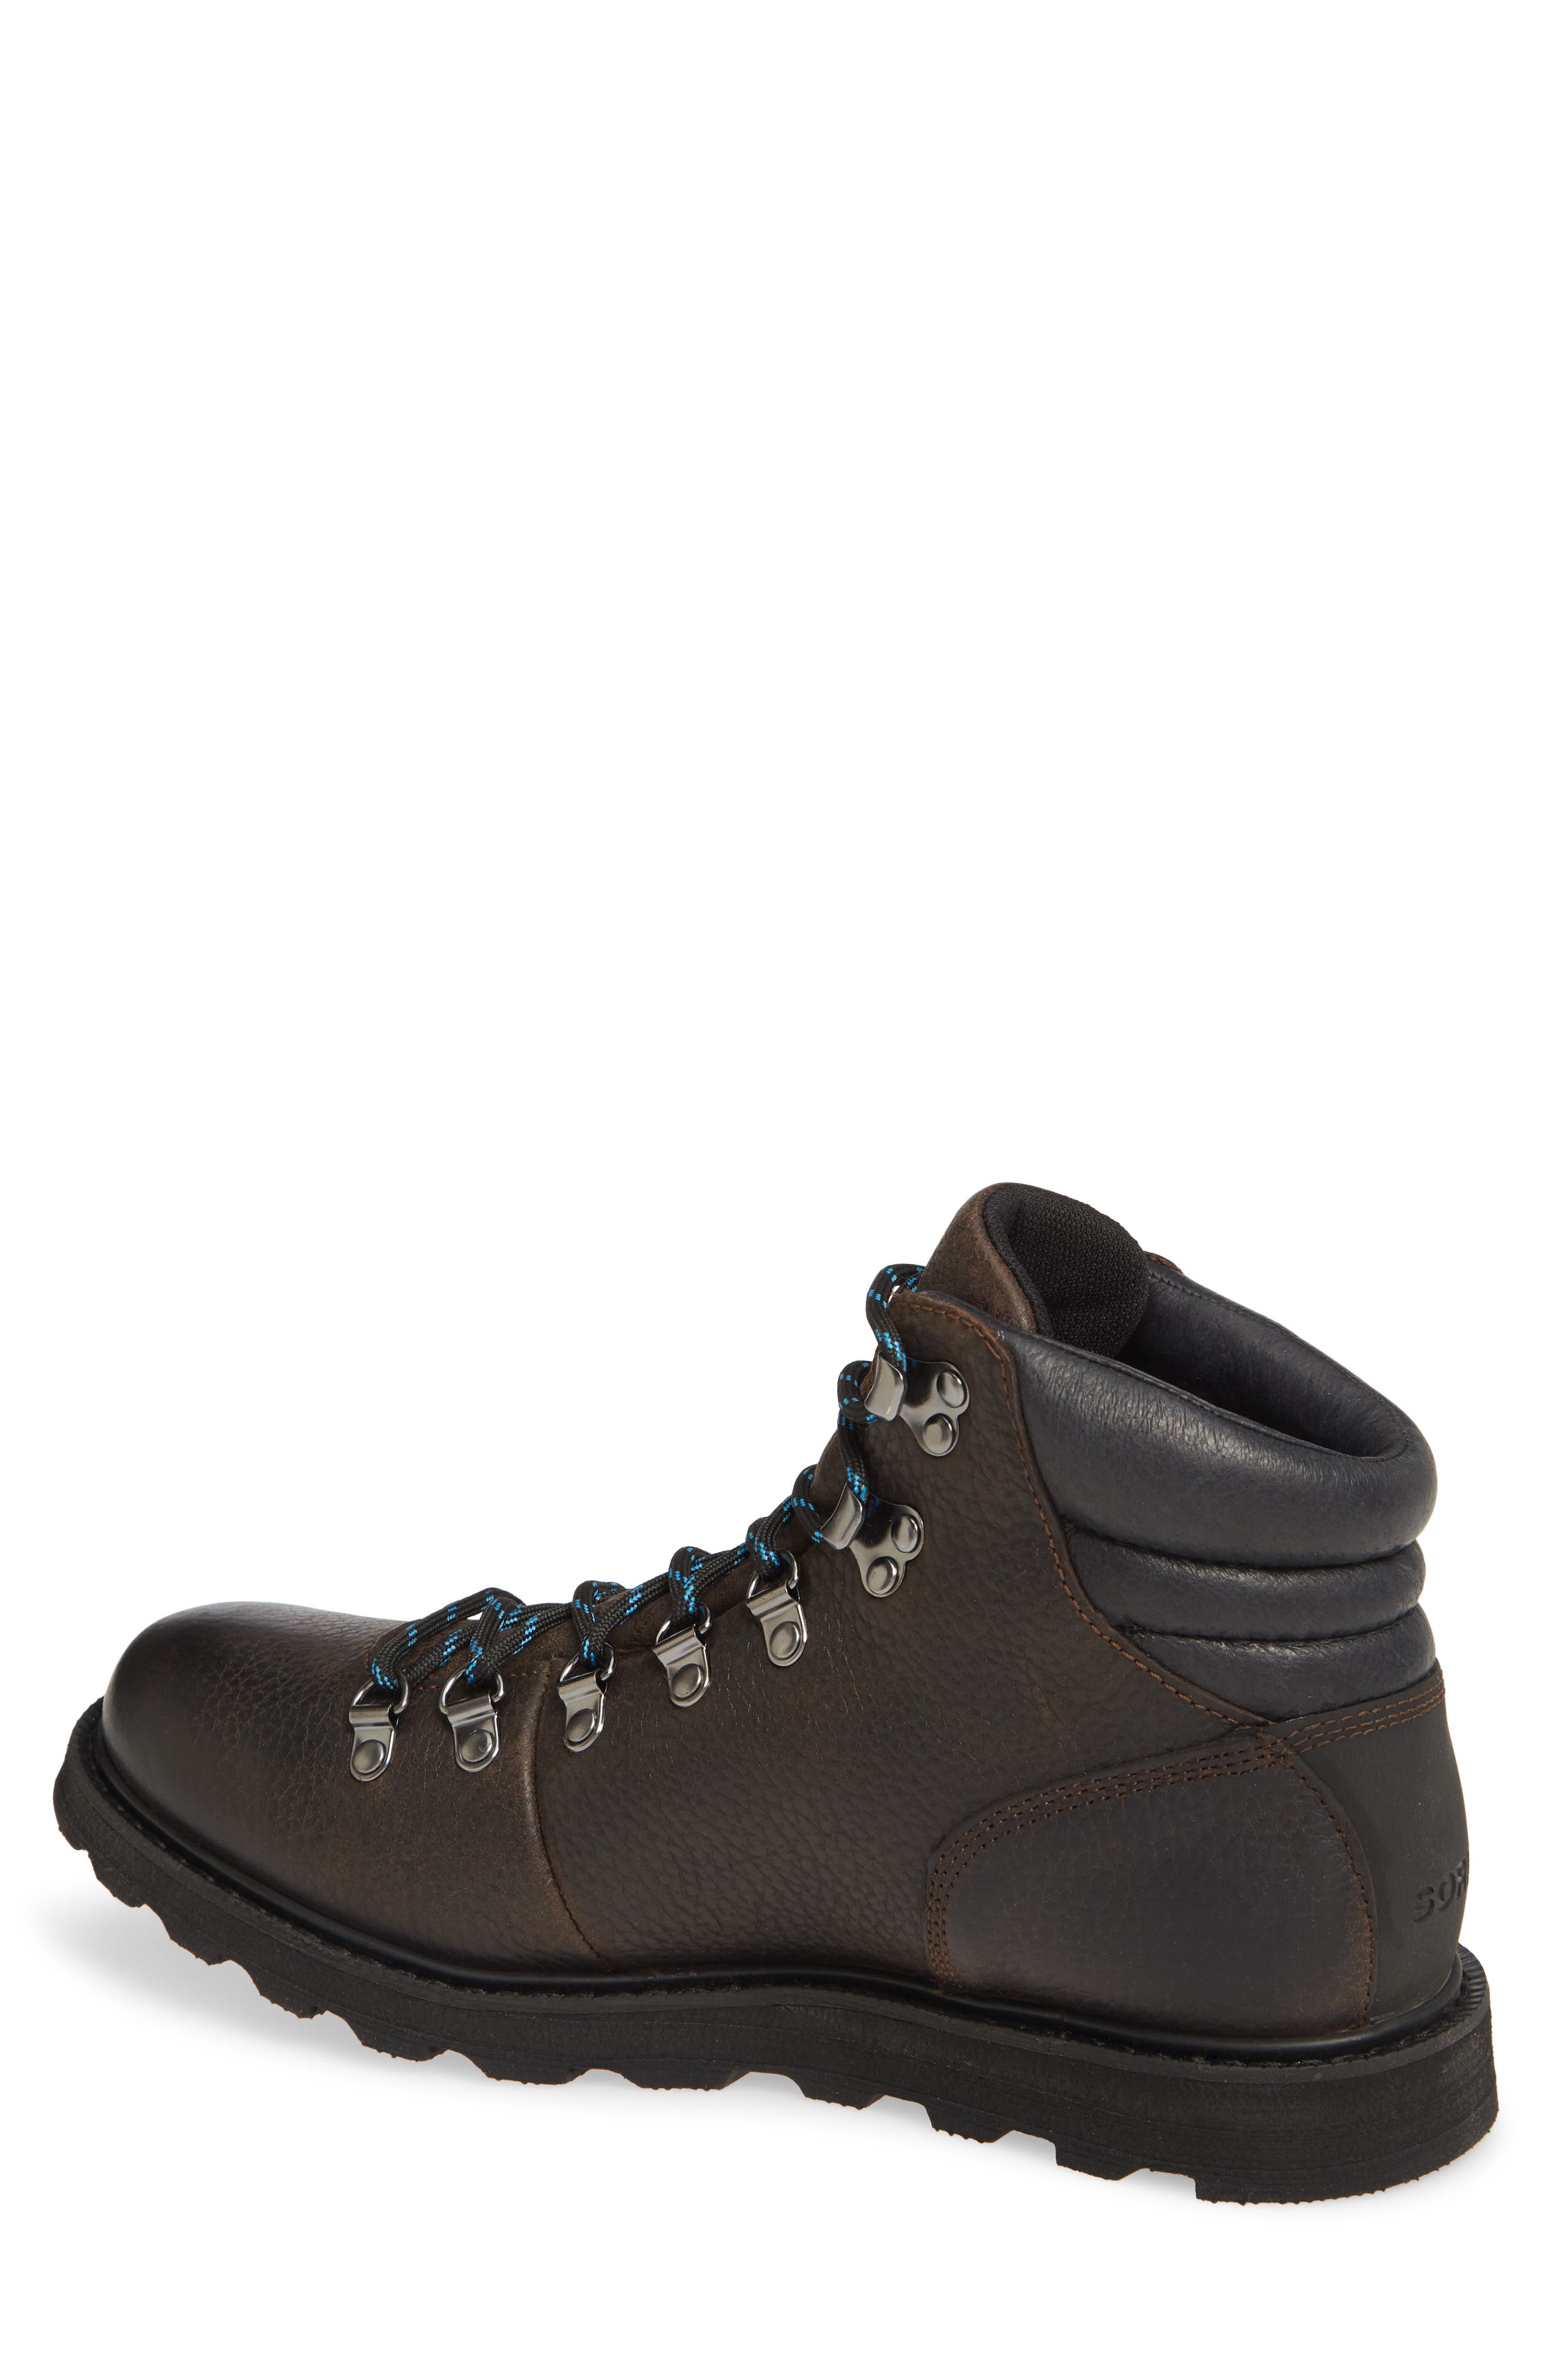 madson waterproof hiker boots